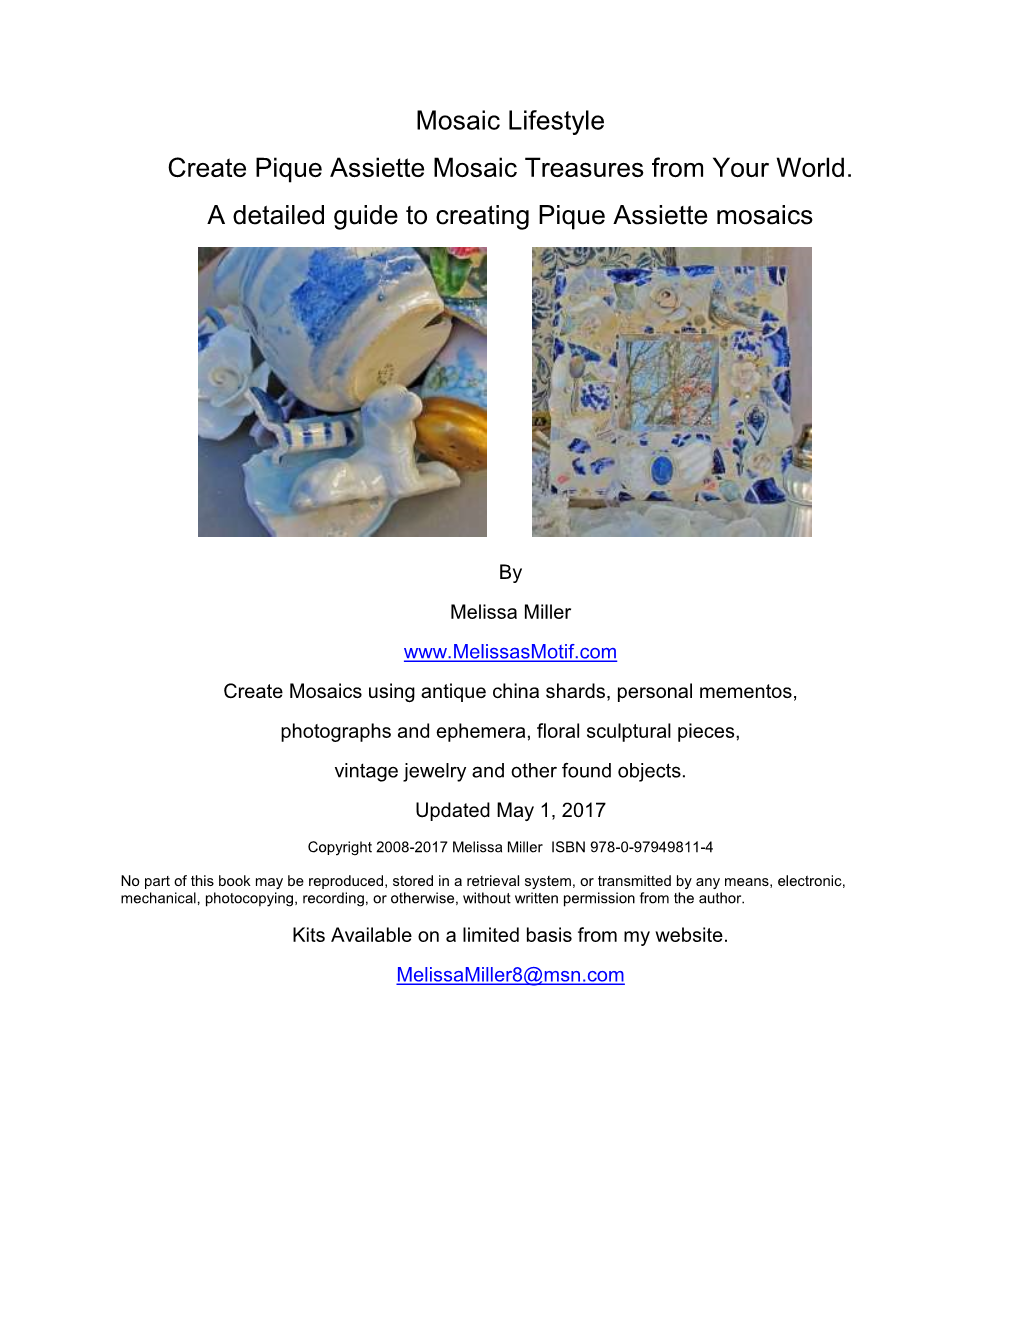 Mosaic Lifestyle: How to Make Pique Assiette Mosaics